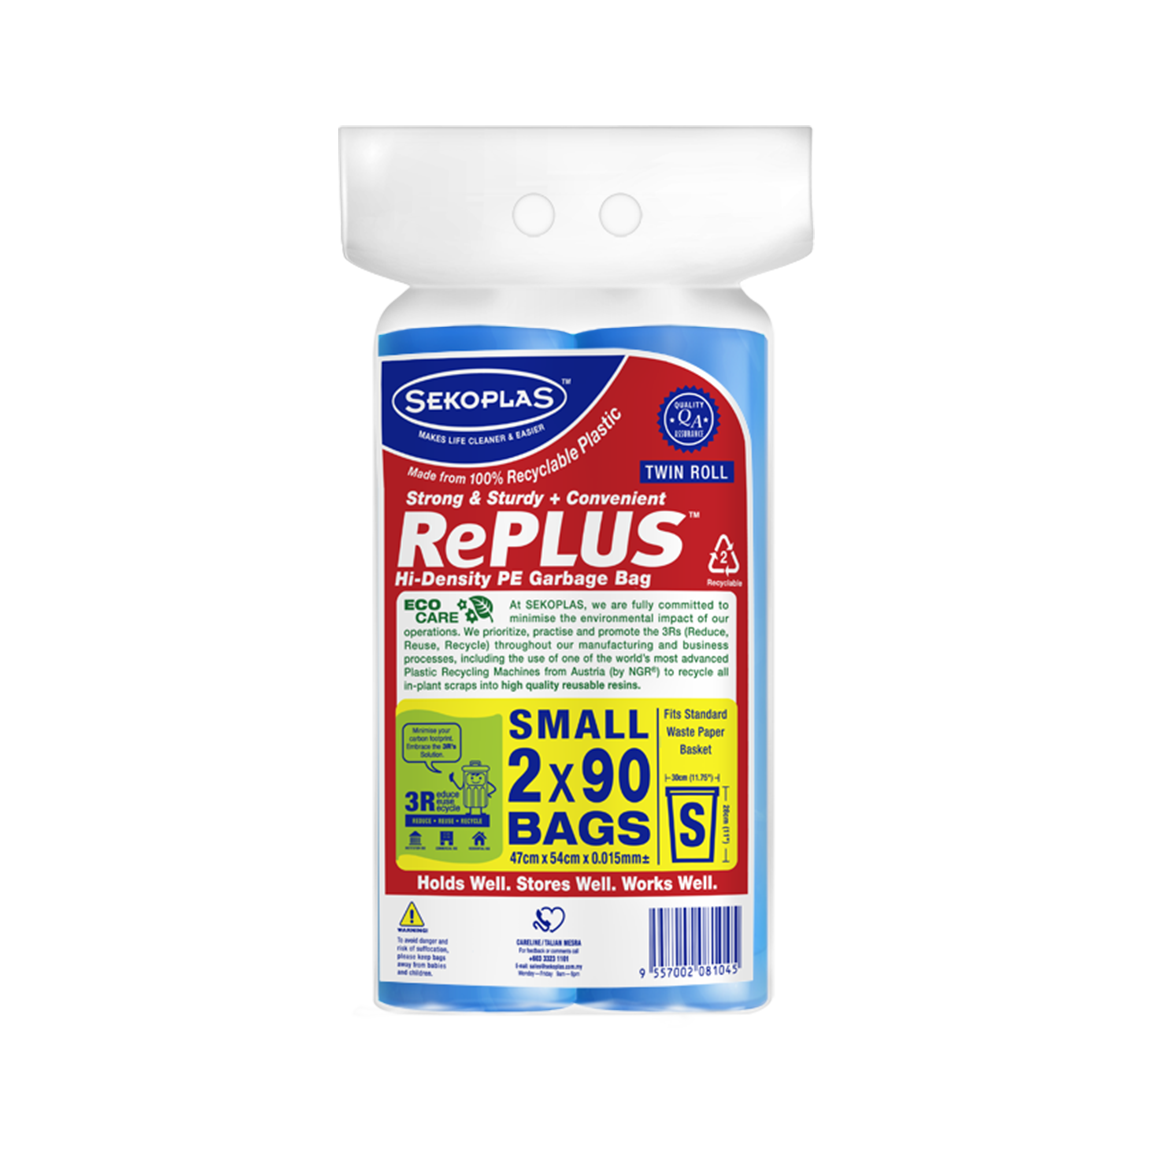 RePLUS™ HDPE Garbage Bags Twin Roll (Small)